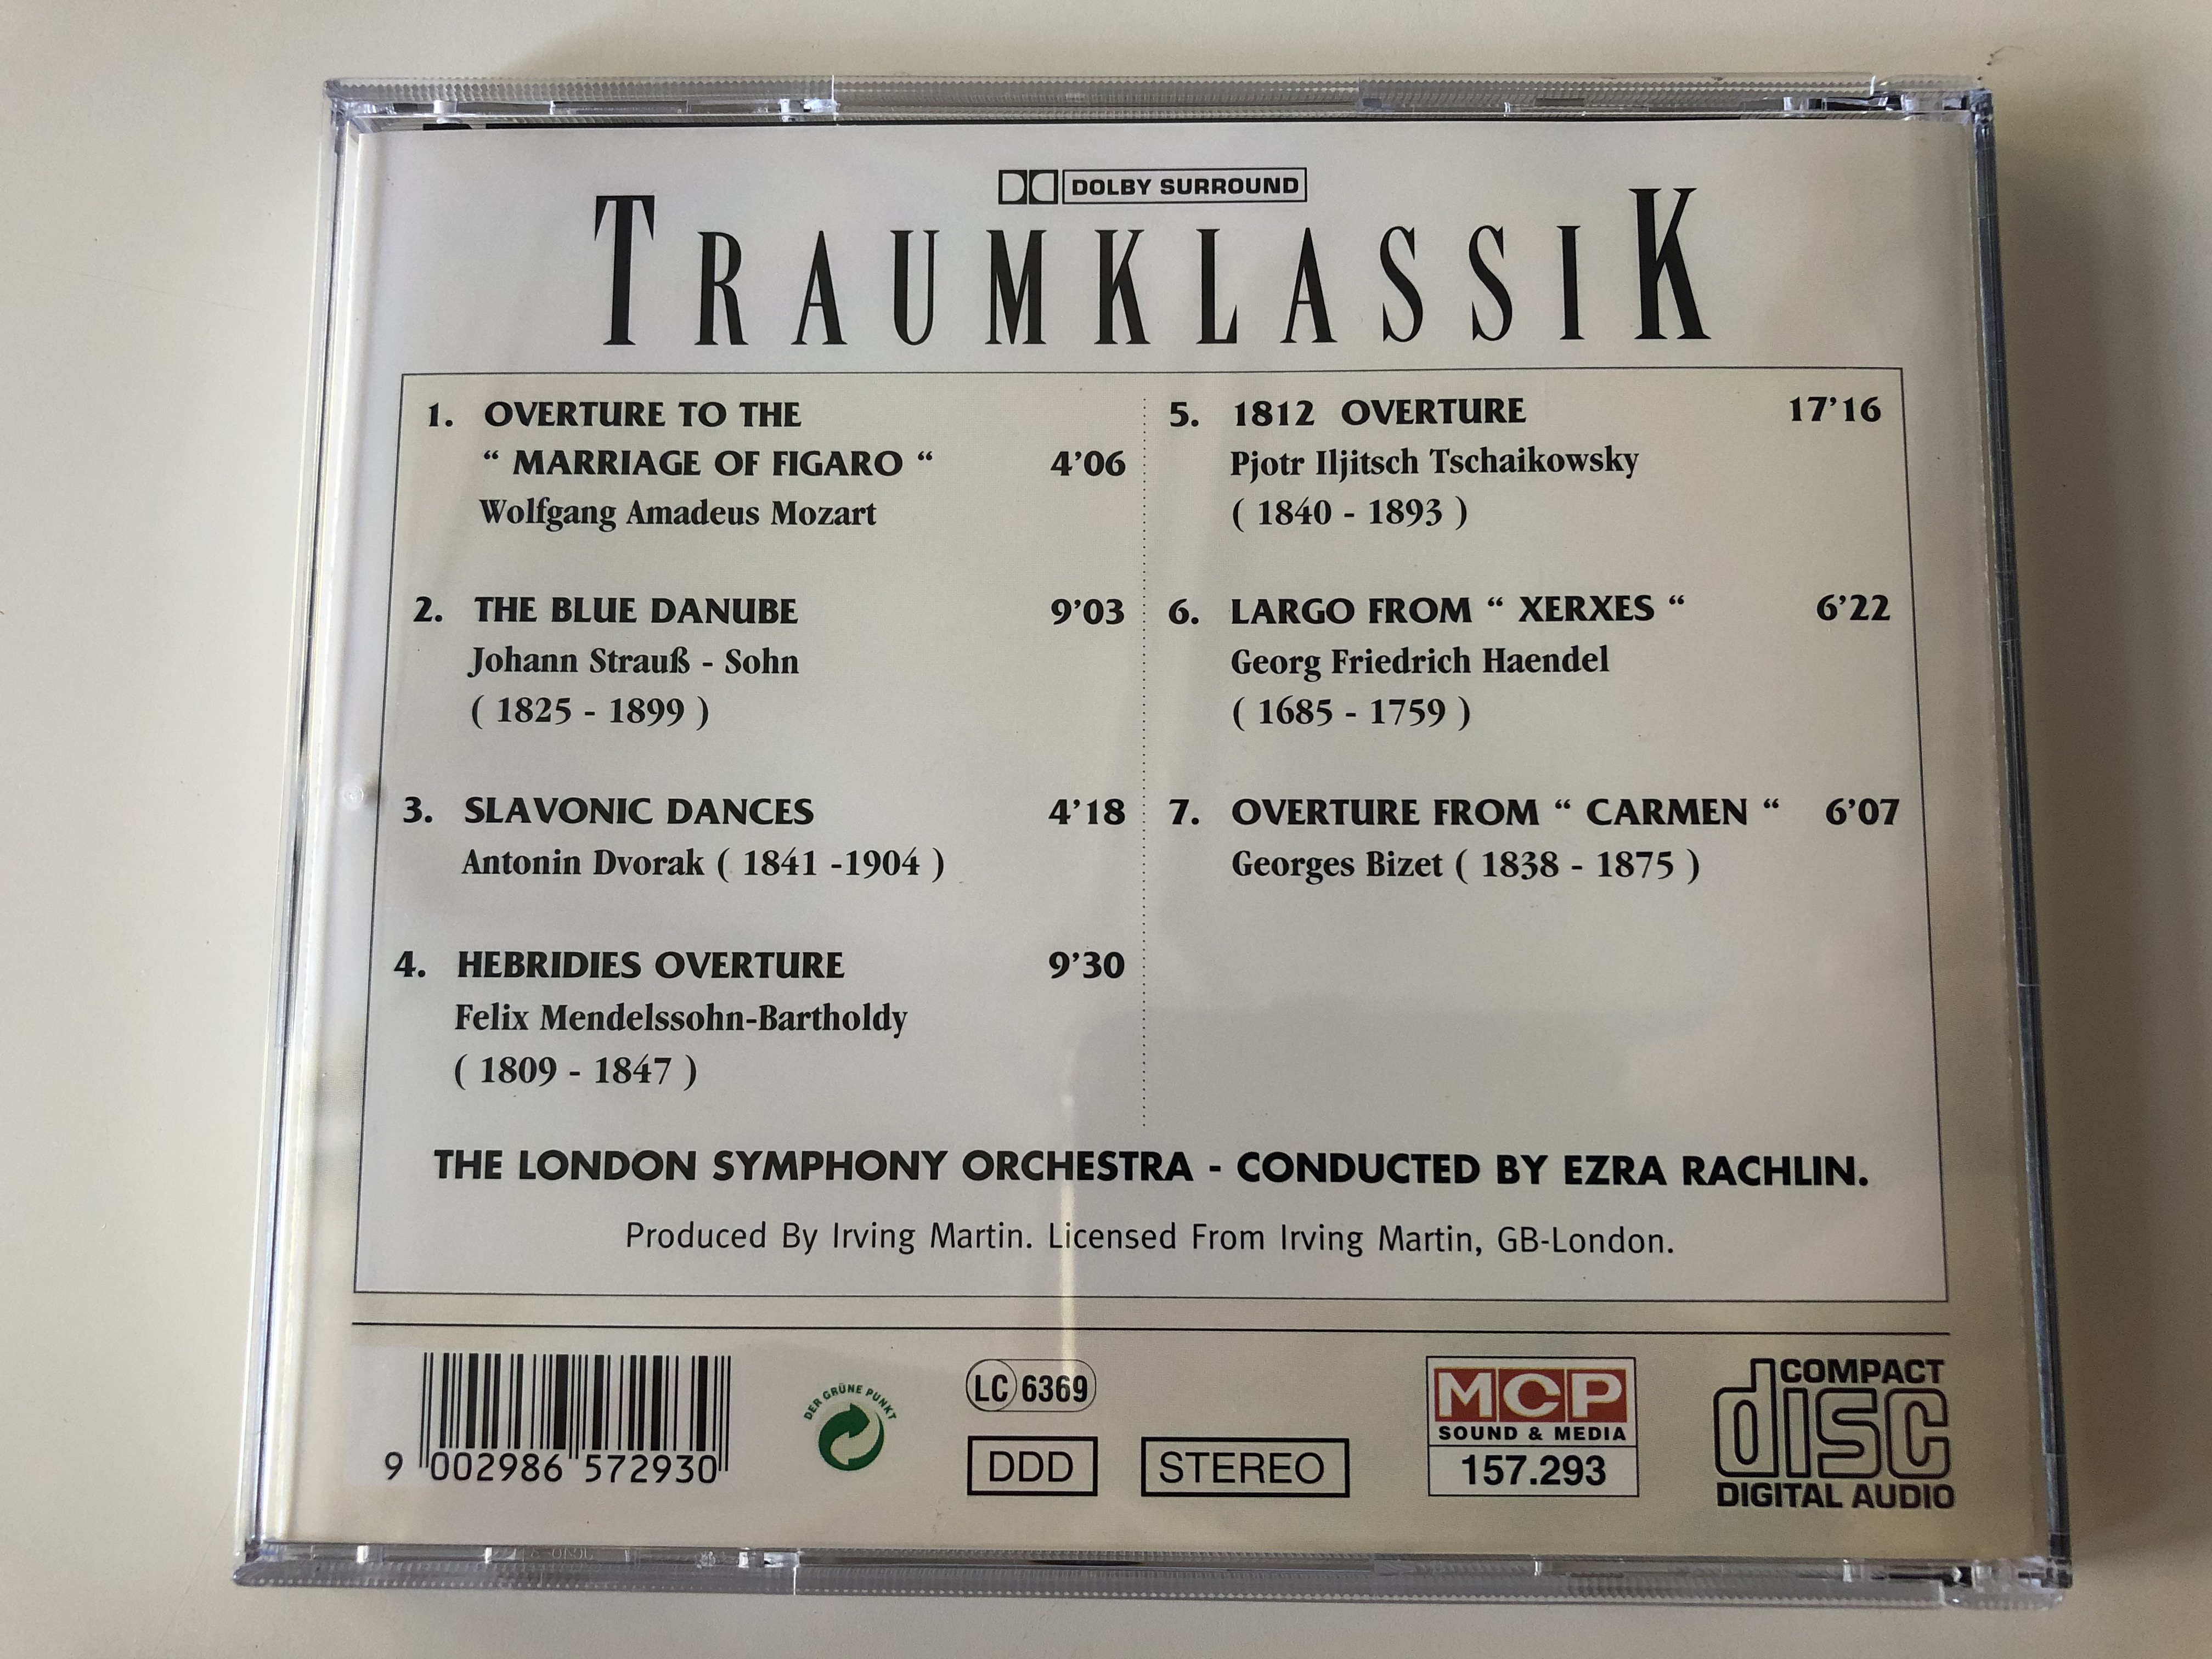 traumklassik-the-london-symphony-orchestra-vol.-1-slavonic-dances-antonin-dvorak-hebridies-overture-f.-m.-bartholdy-overture-from-carmen-georges-bizet-mcp-sound-media-audio-cd-cd-3-.jpg